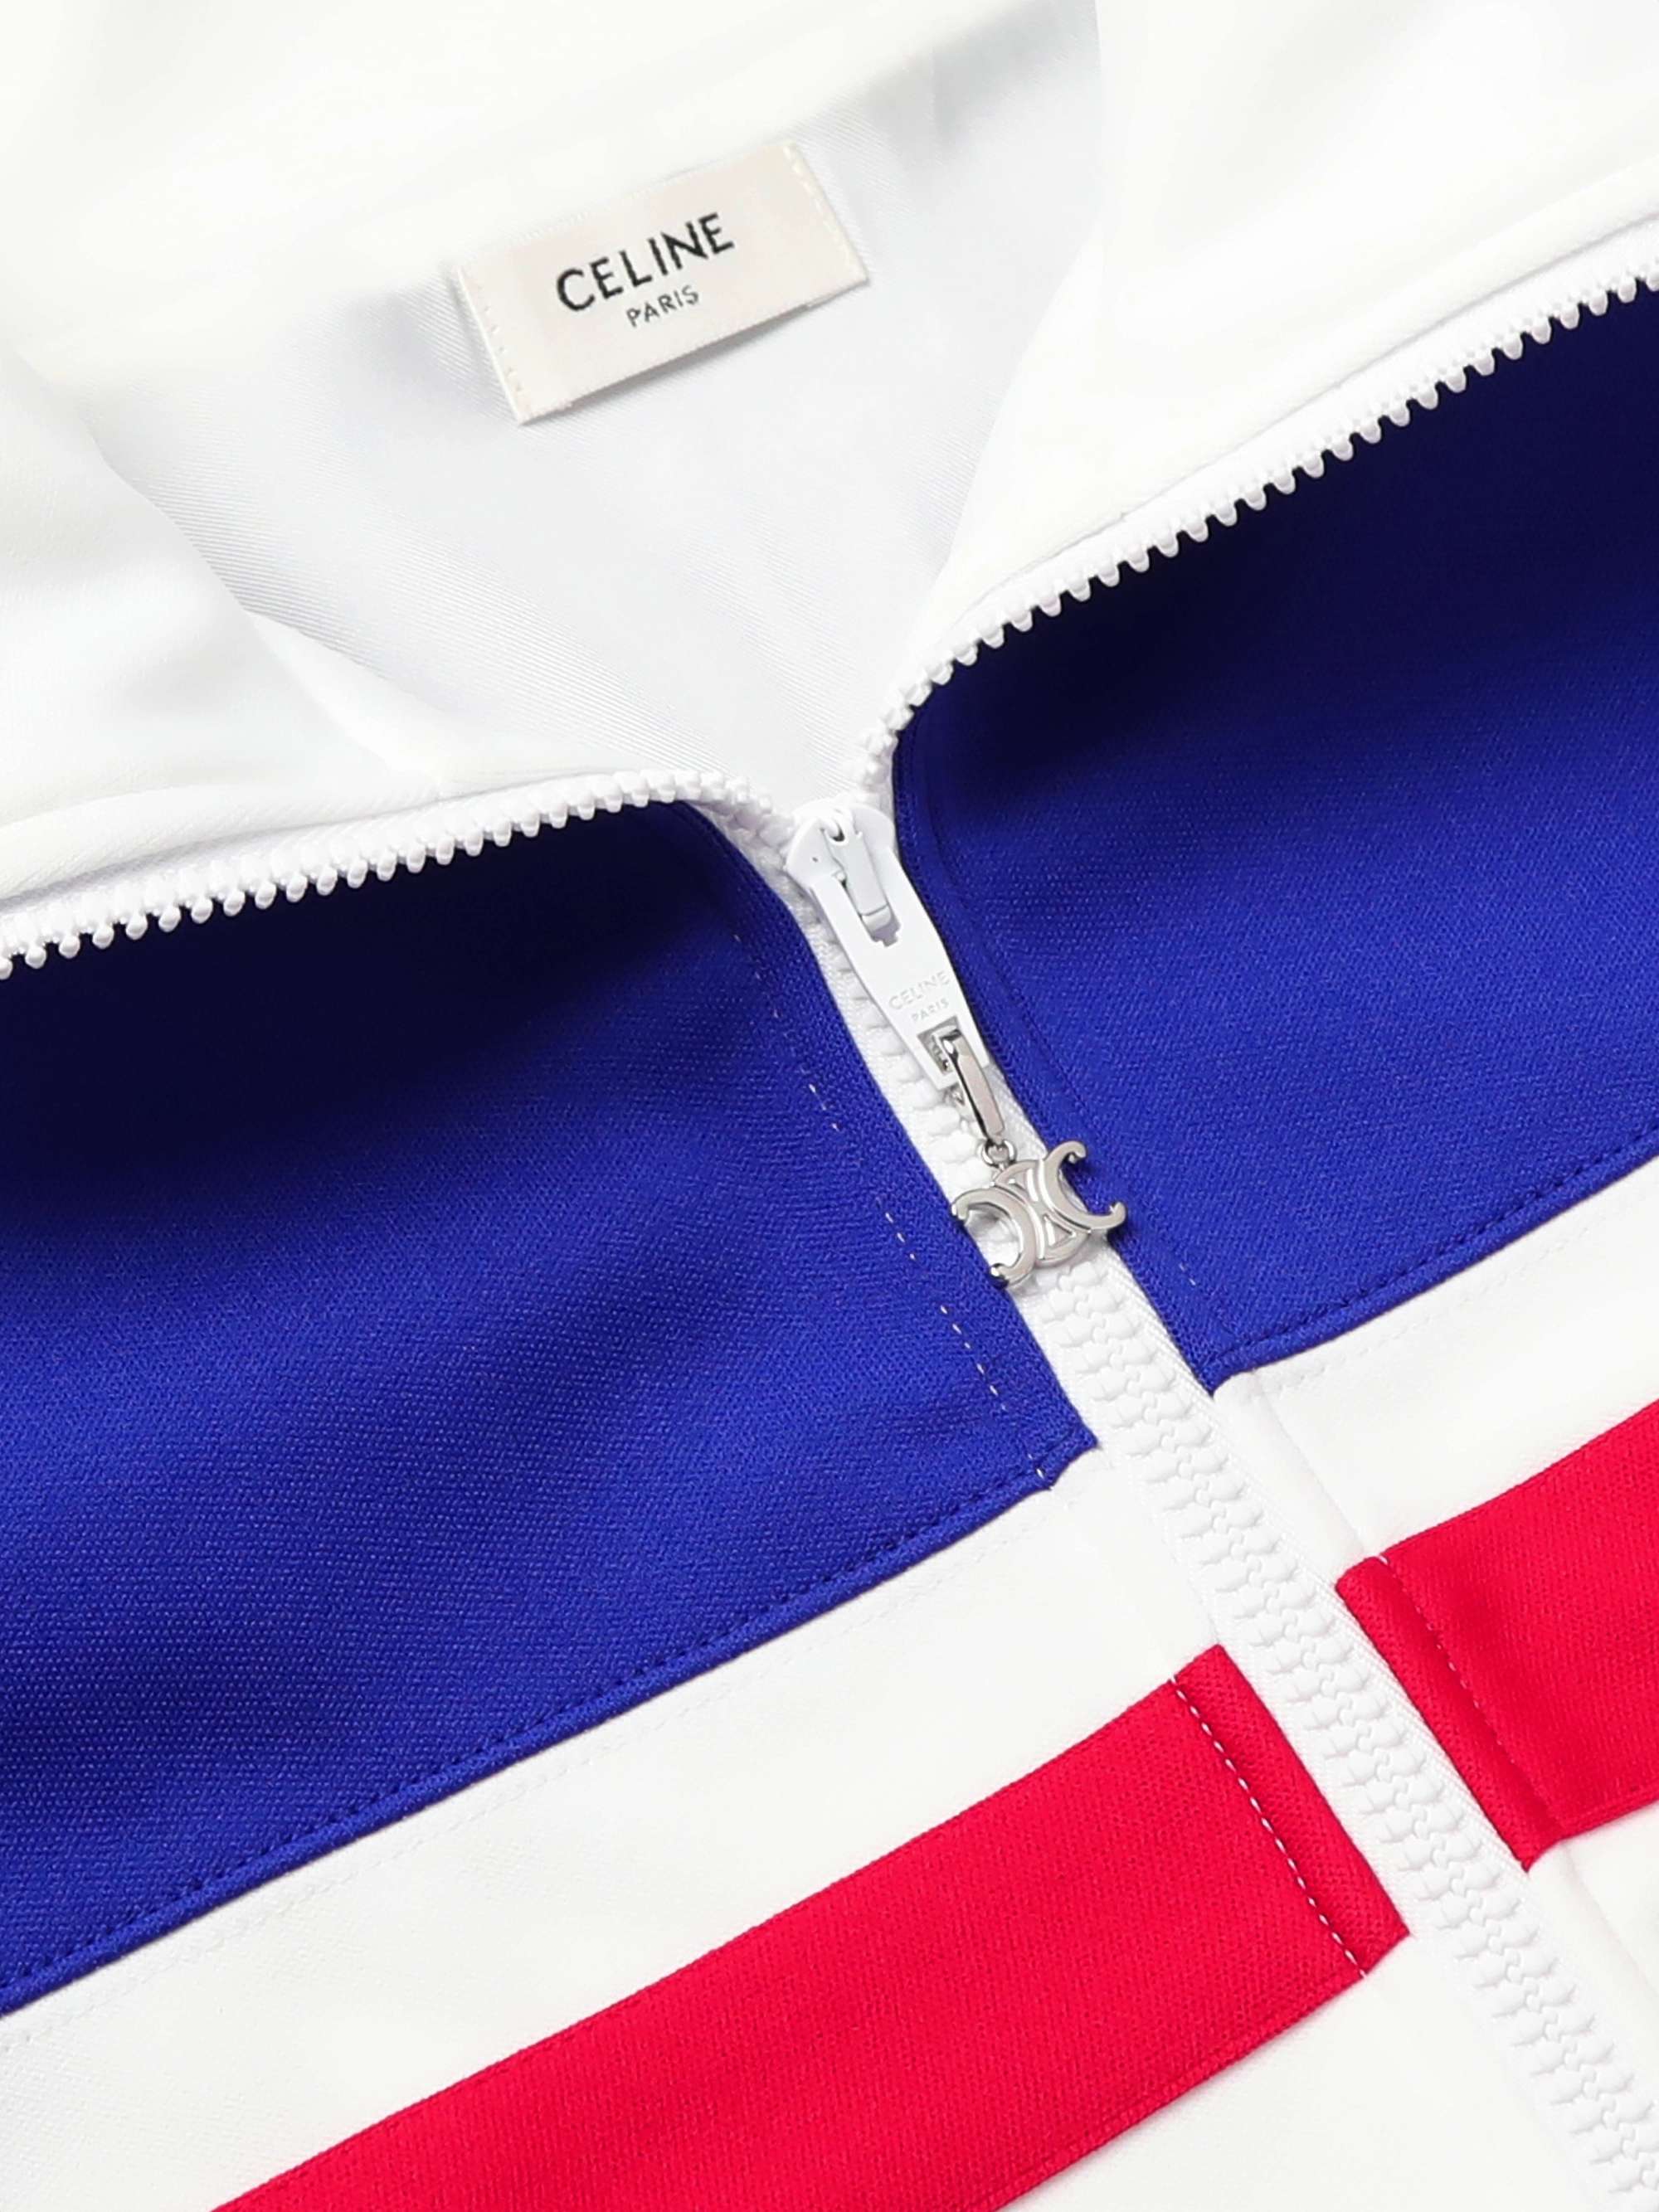 CELINE Logo-Embroidered Striped Jersey Track Jacket